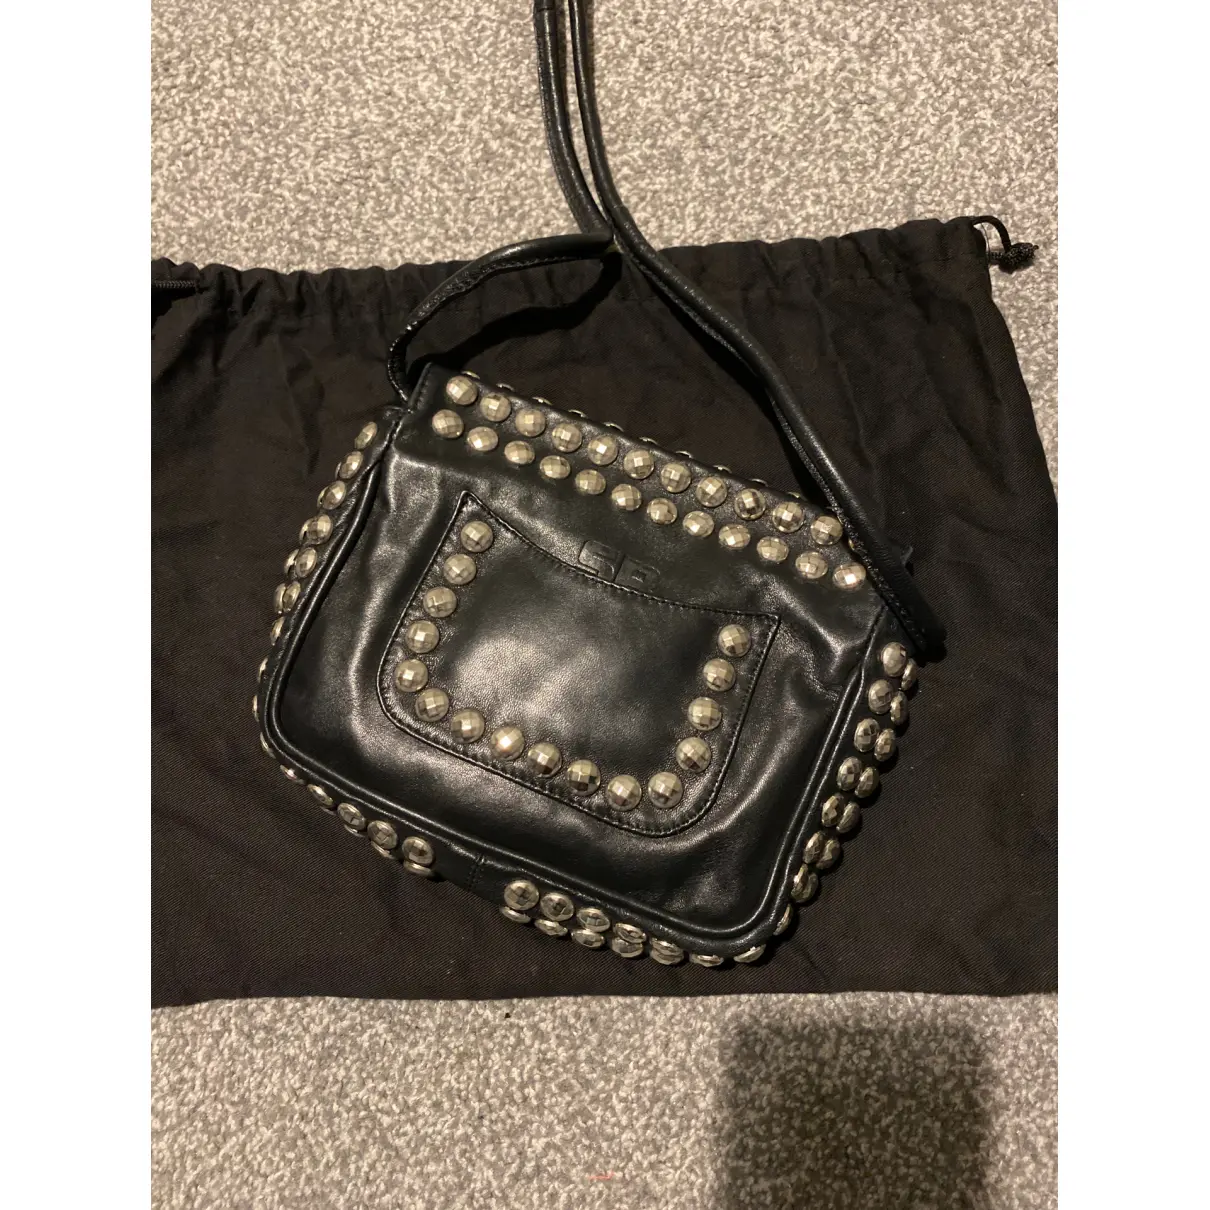 Buy Sonia Rykiel Domino leather crossbody bag online